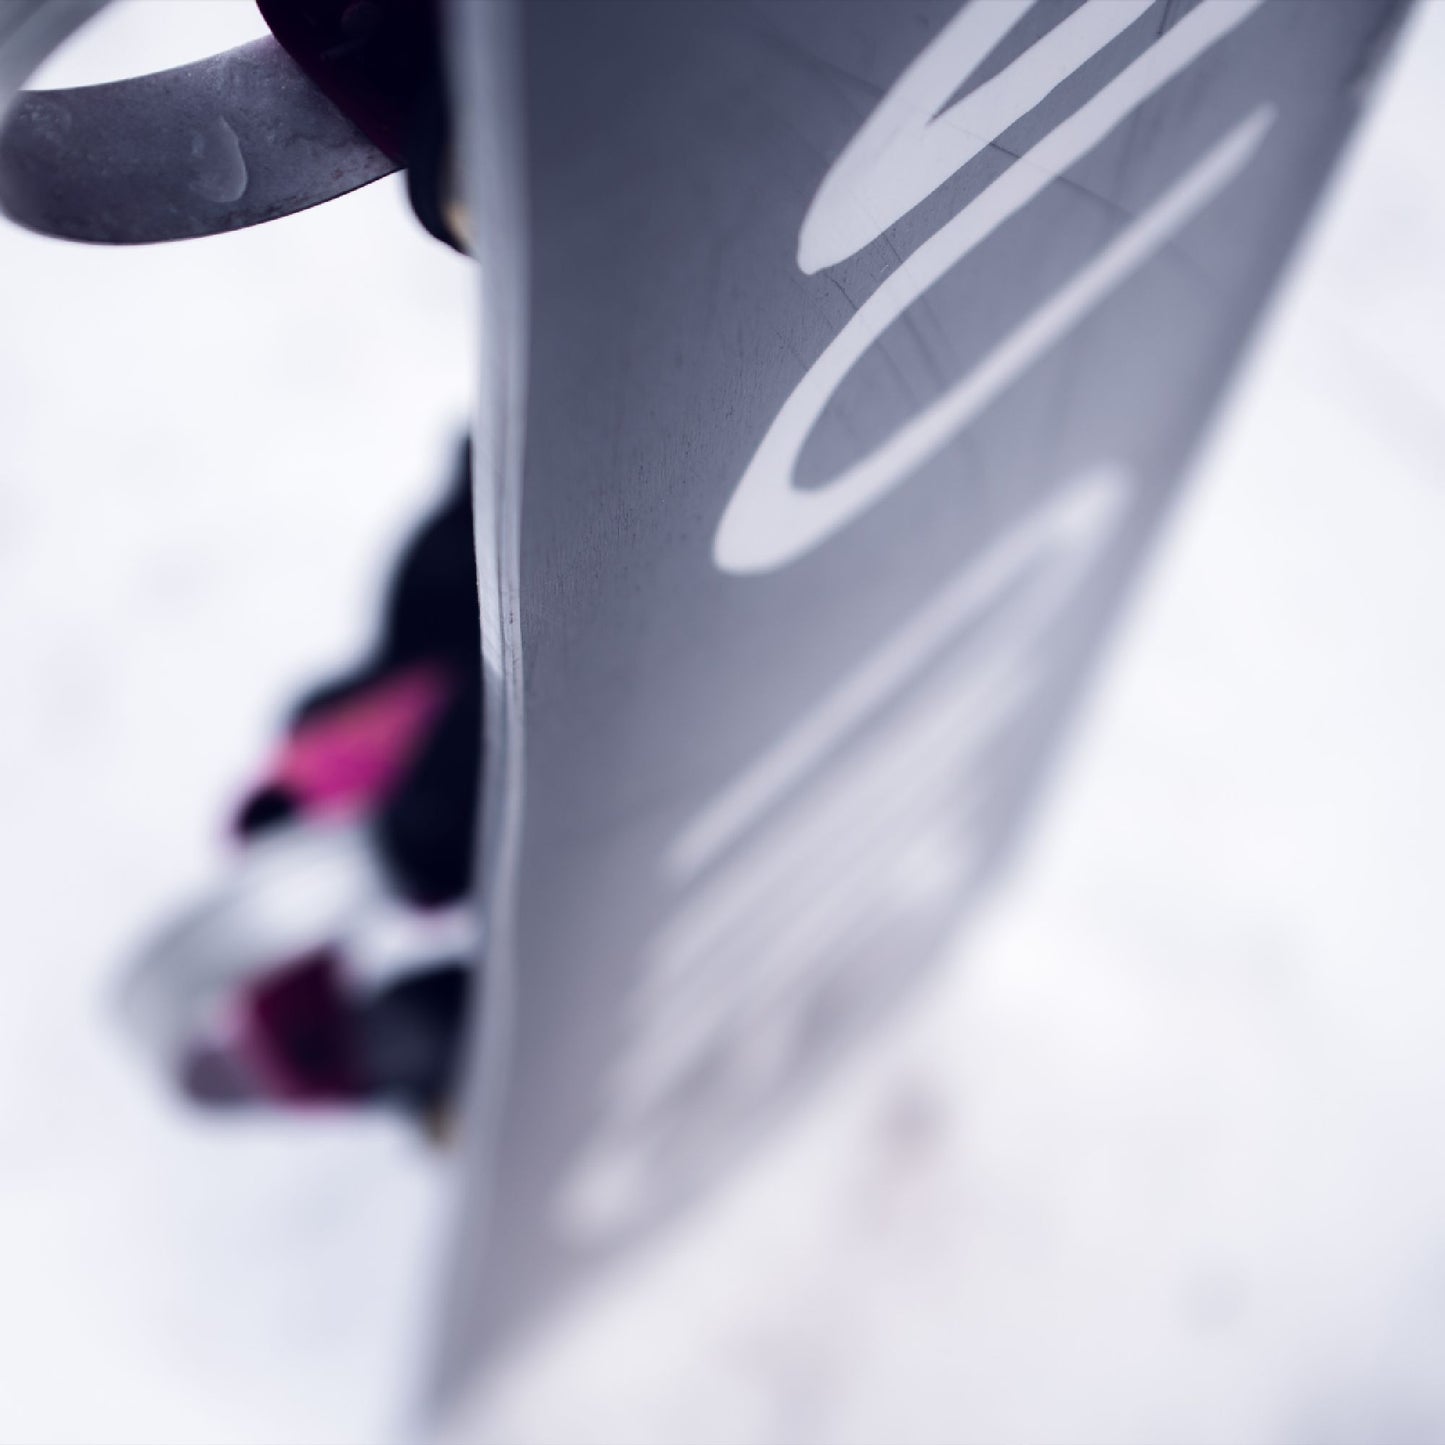 GNU Riders Choice Snowboard 2024 Snowboards